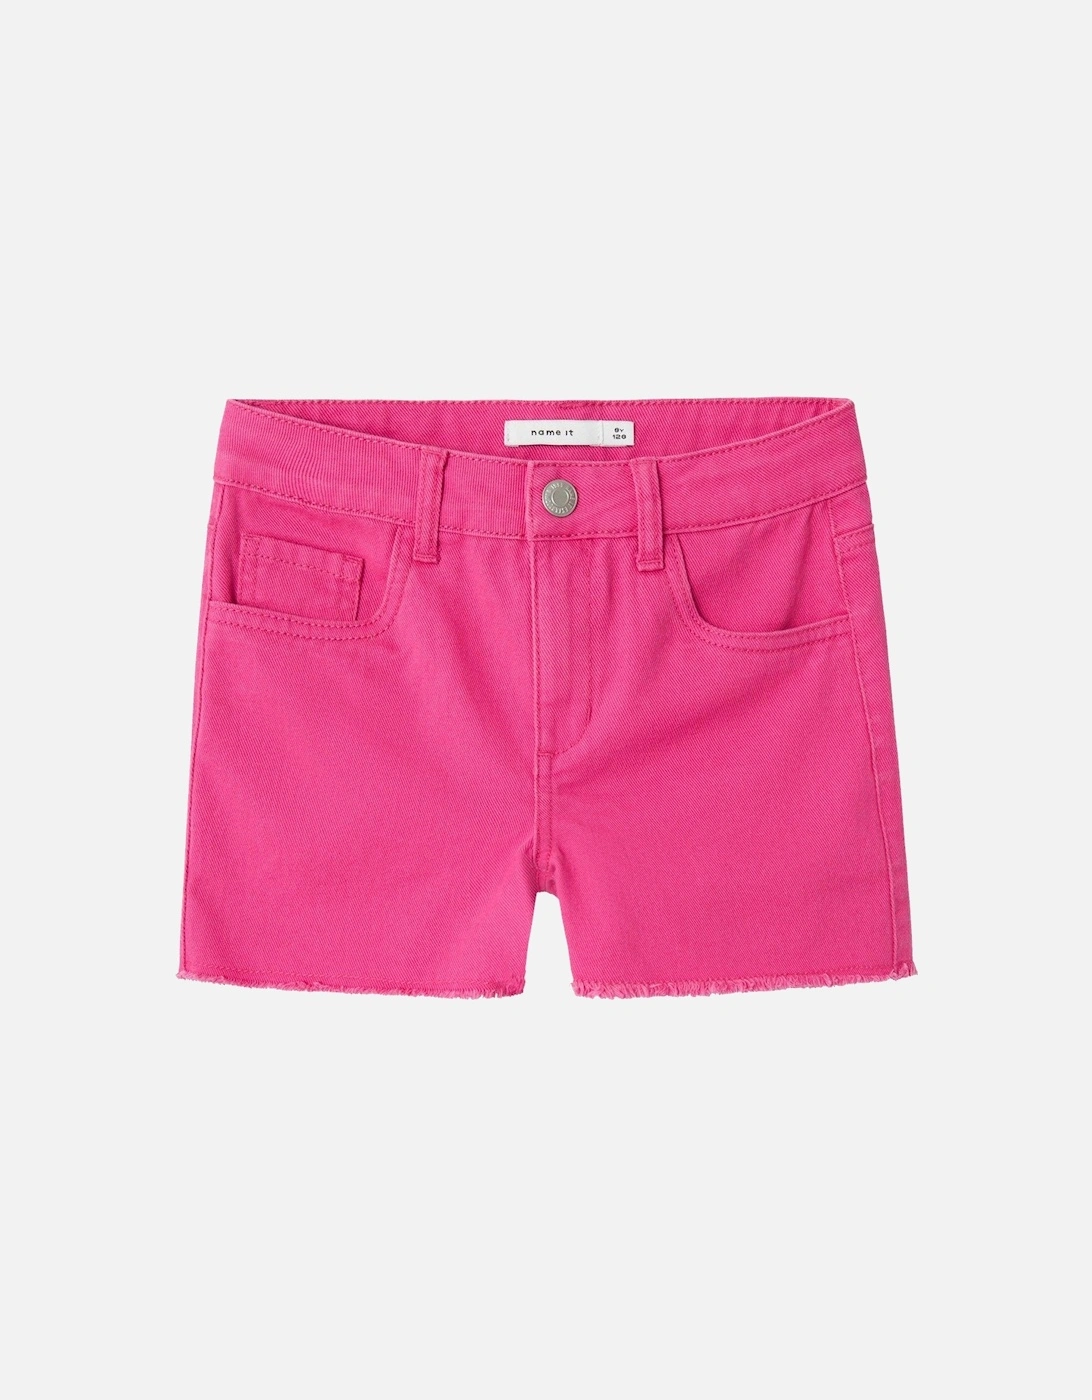 Girls Mom Fit Denim Shorts - Raspberry Rose, 4 of 3